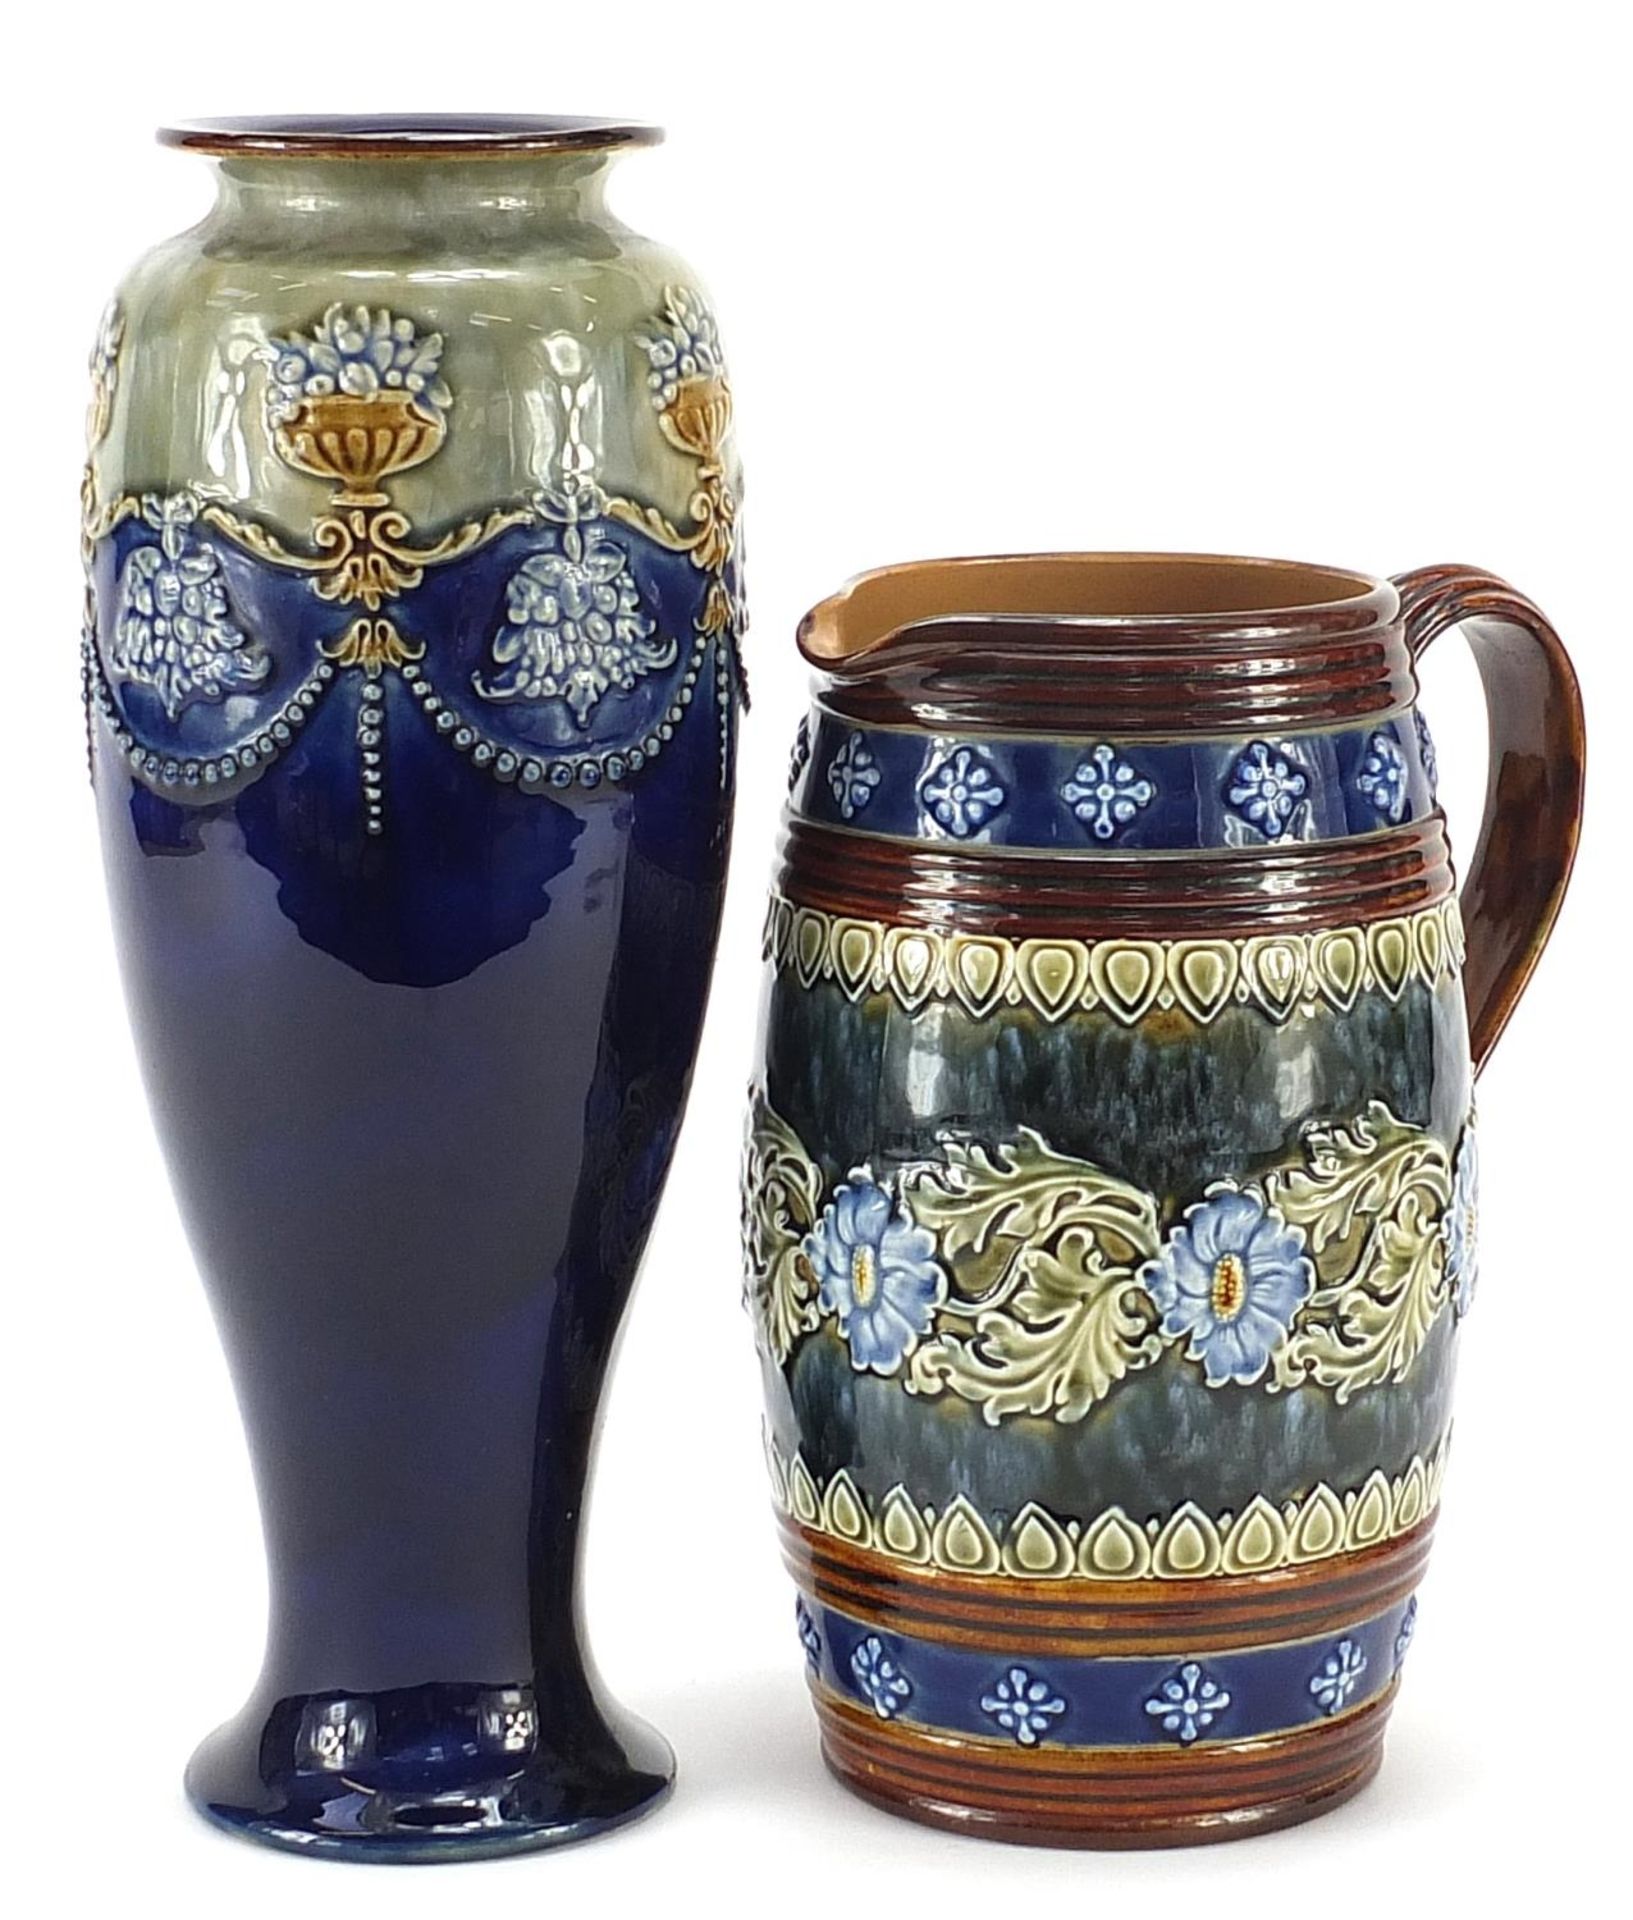 Doulton Lambeth stoneware jug and Royal Doulton stoneware vase hand painted with stylised flowers,